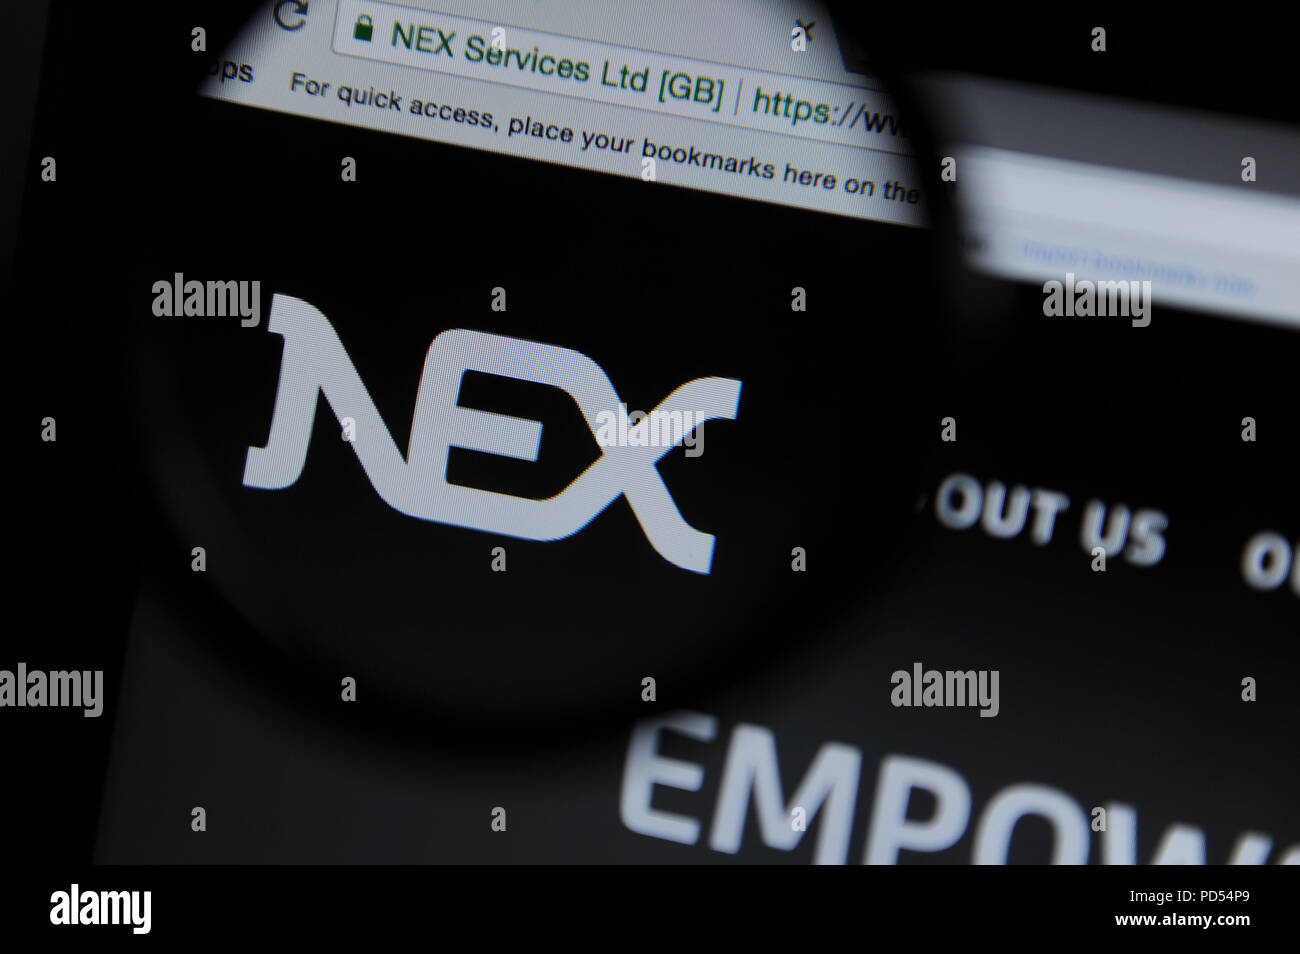 The NEX website seen through a magnifying glass Stock Photo